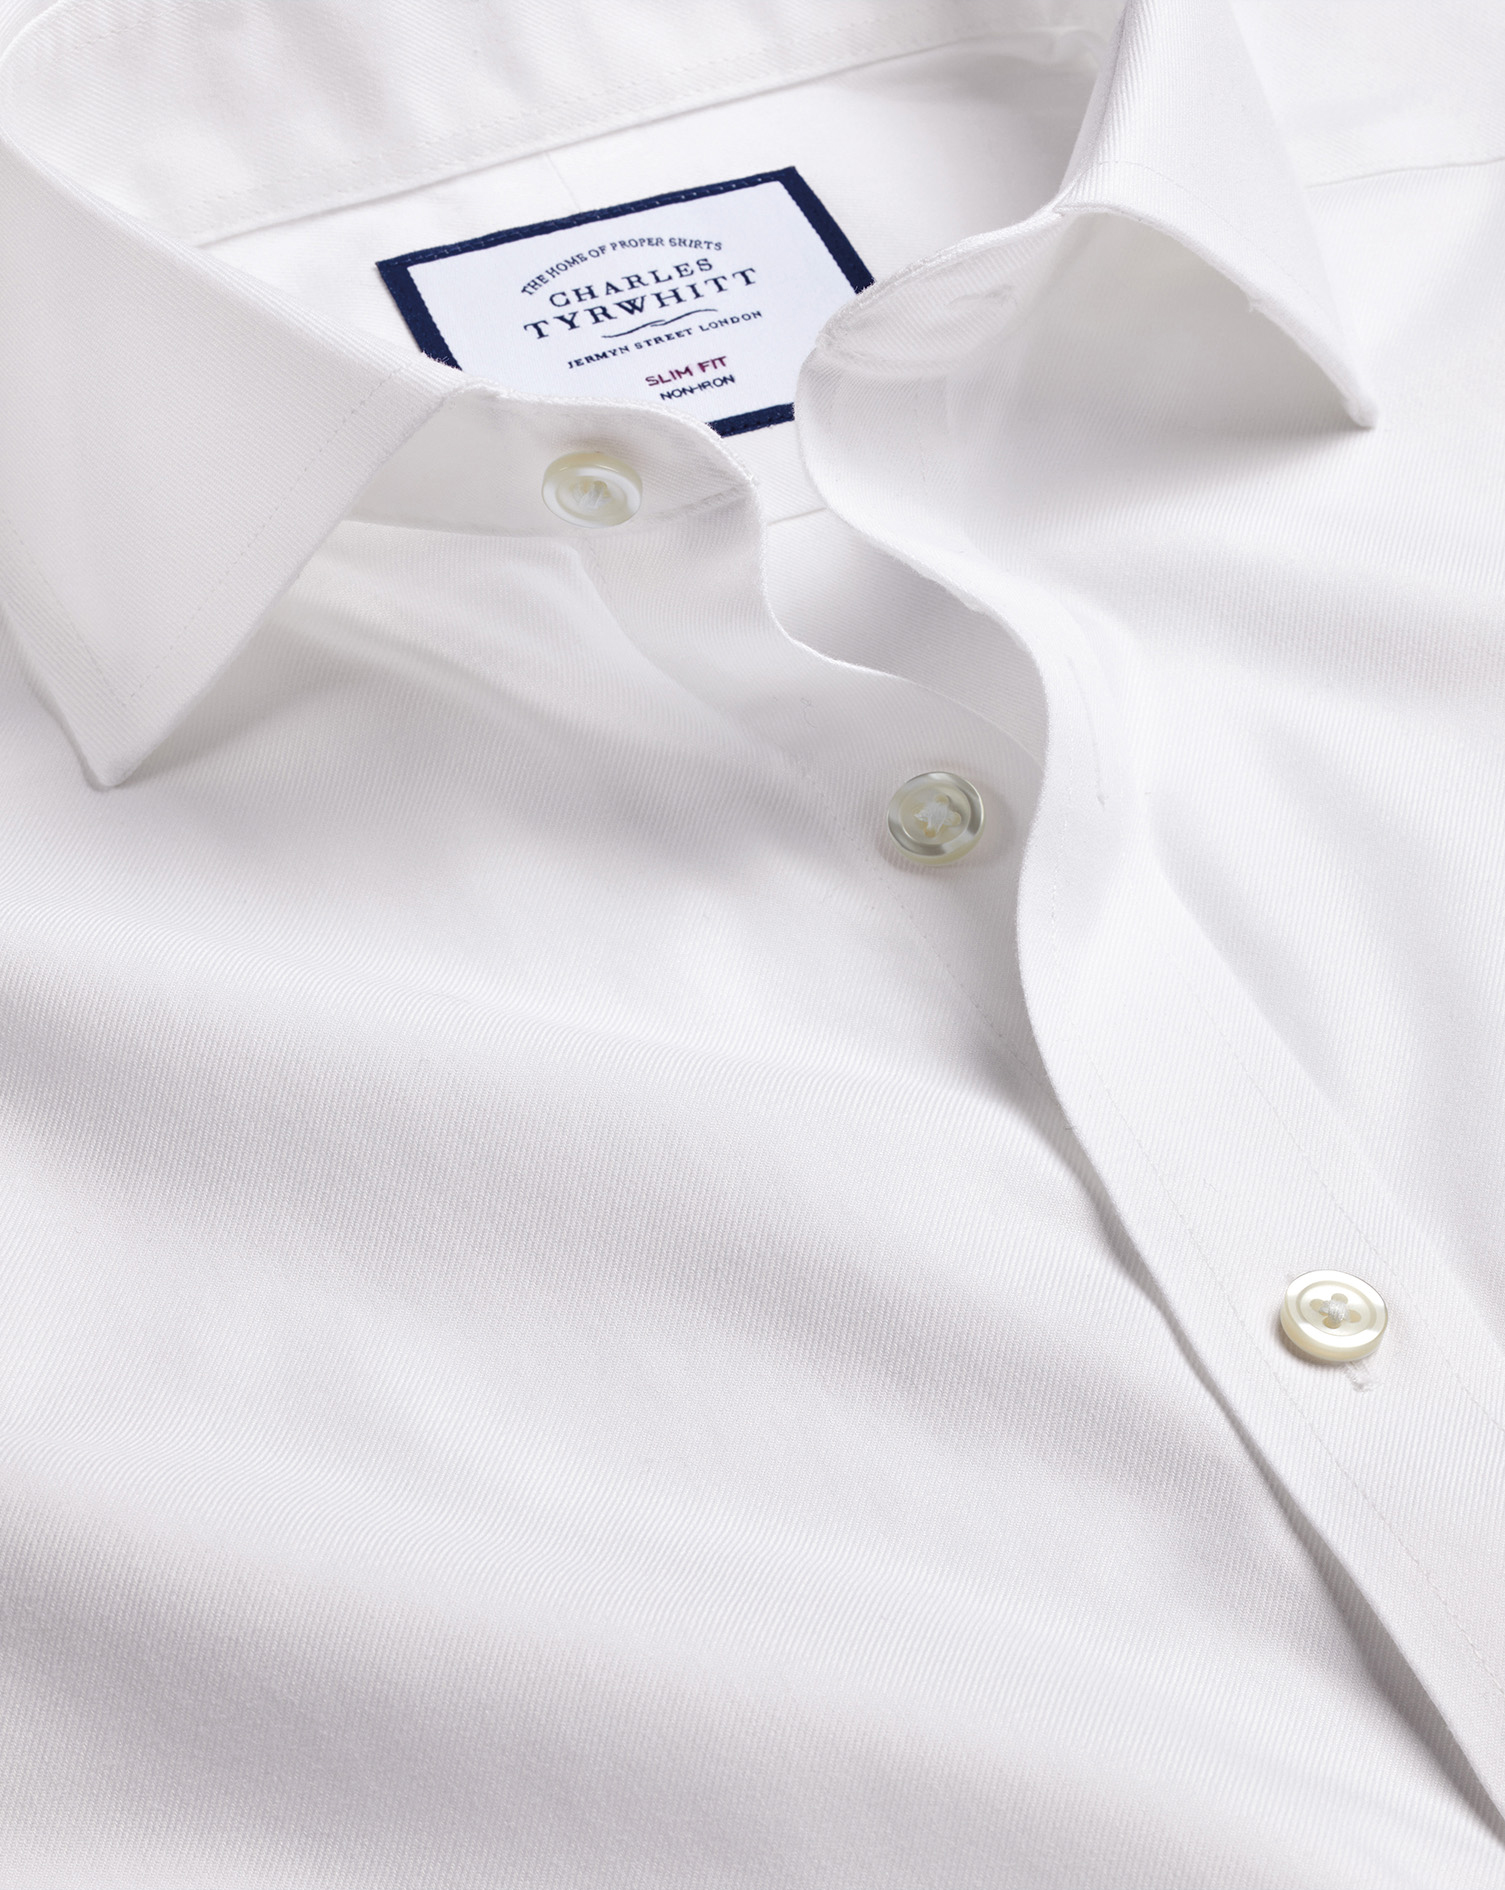 Charles Tyrwhitt Charles Tyrwhitt classic Shirt 16" Collar For Cufflinks 